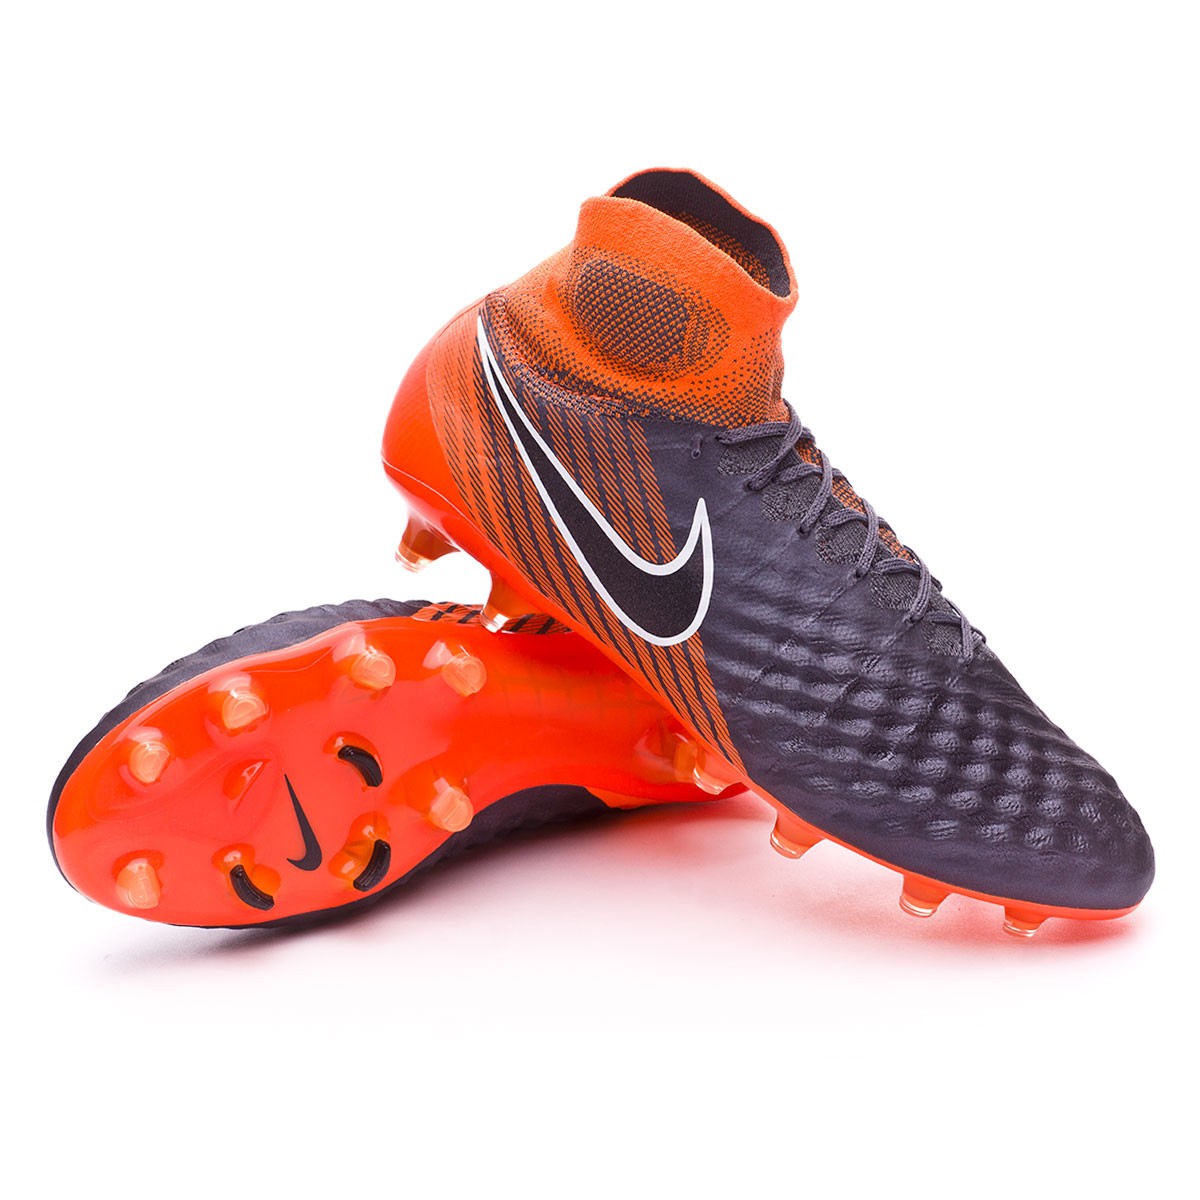 Football Boots Nike Magista Obra II 